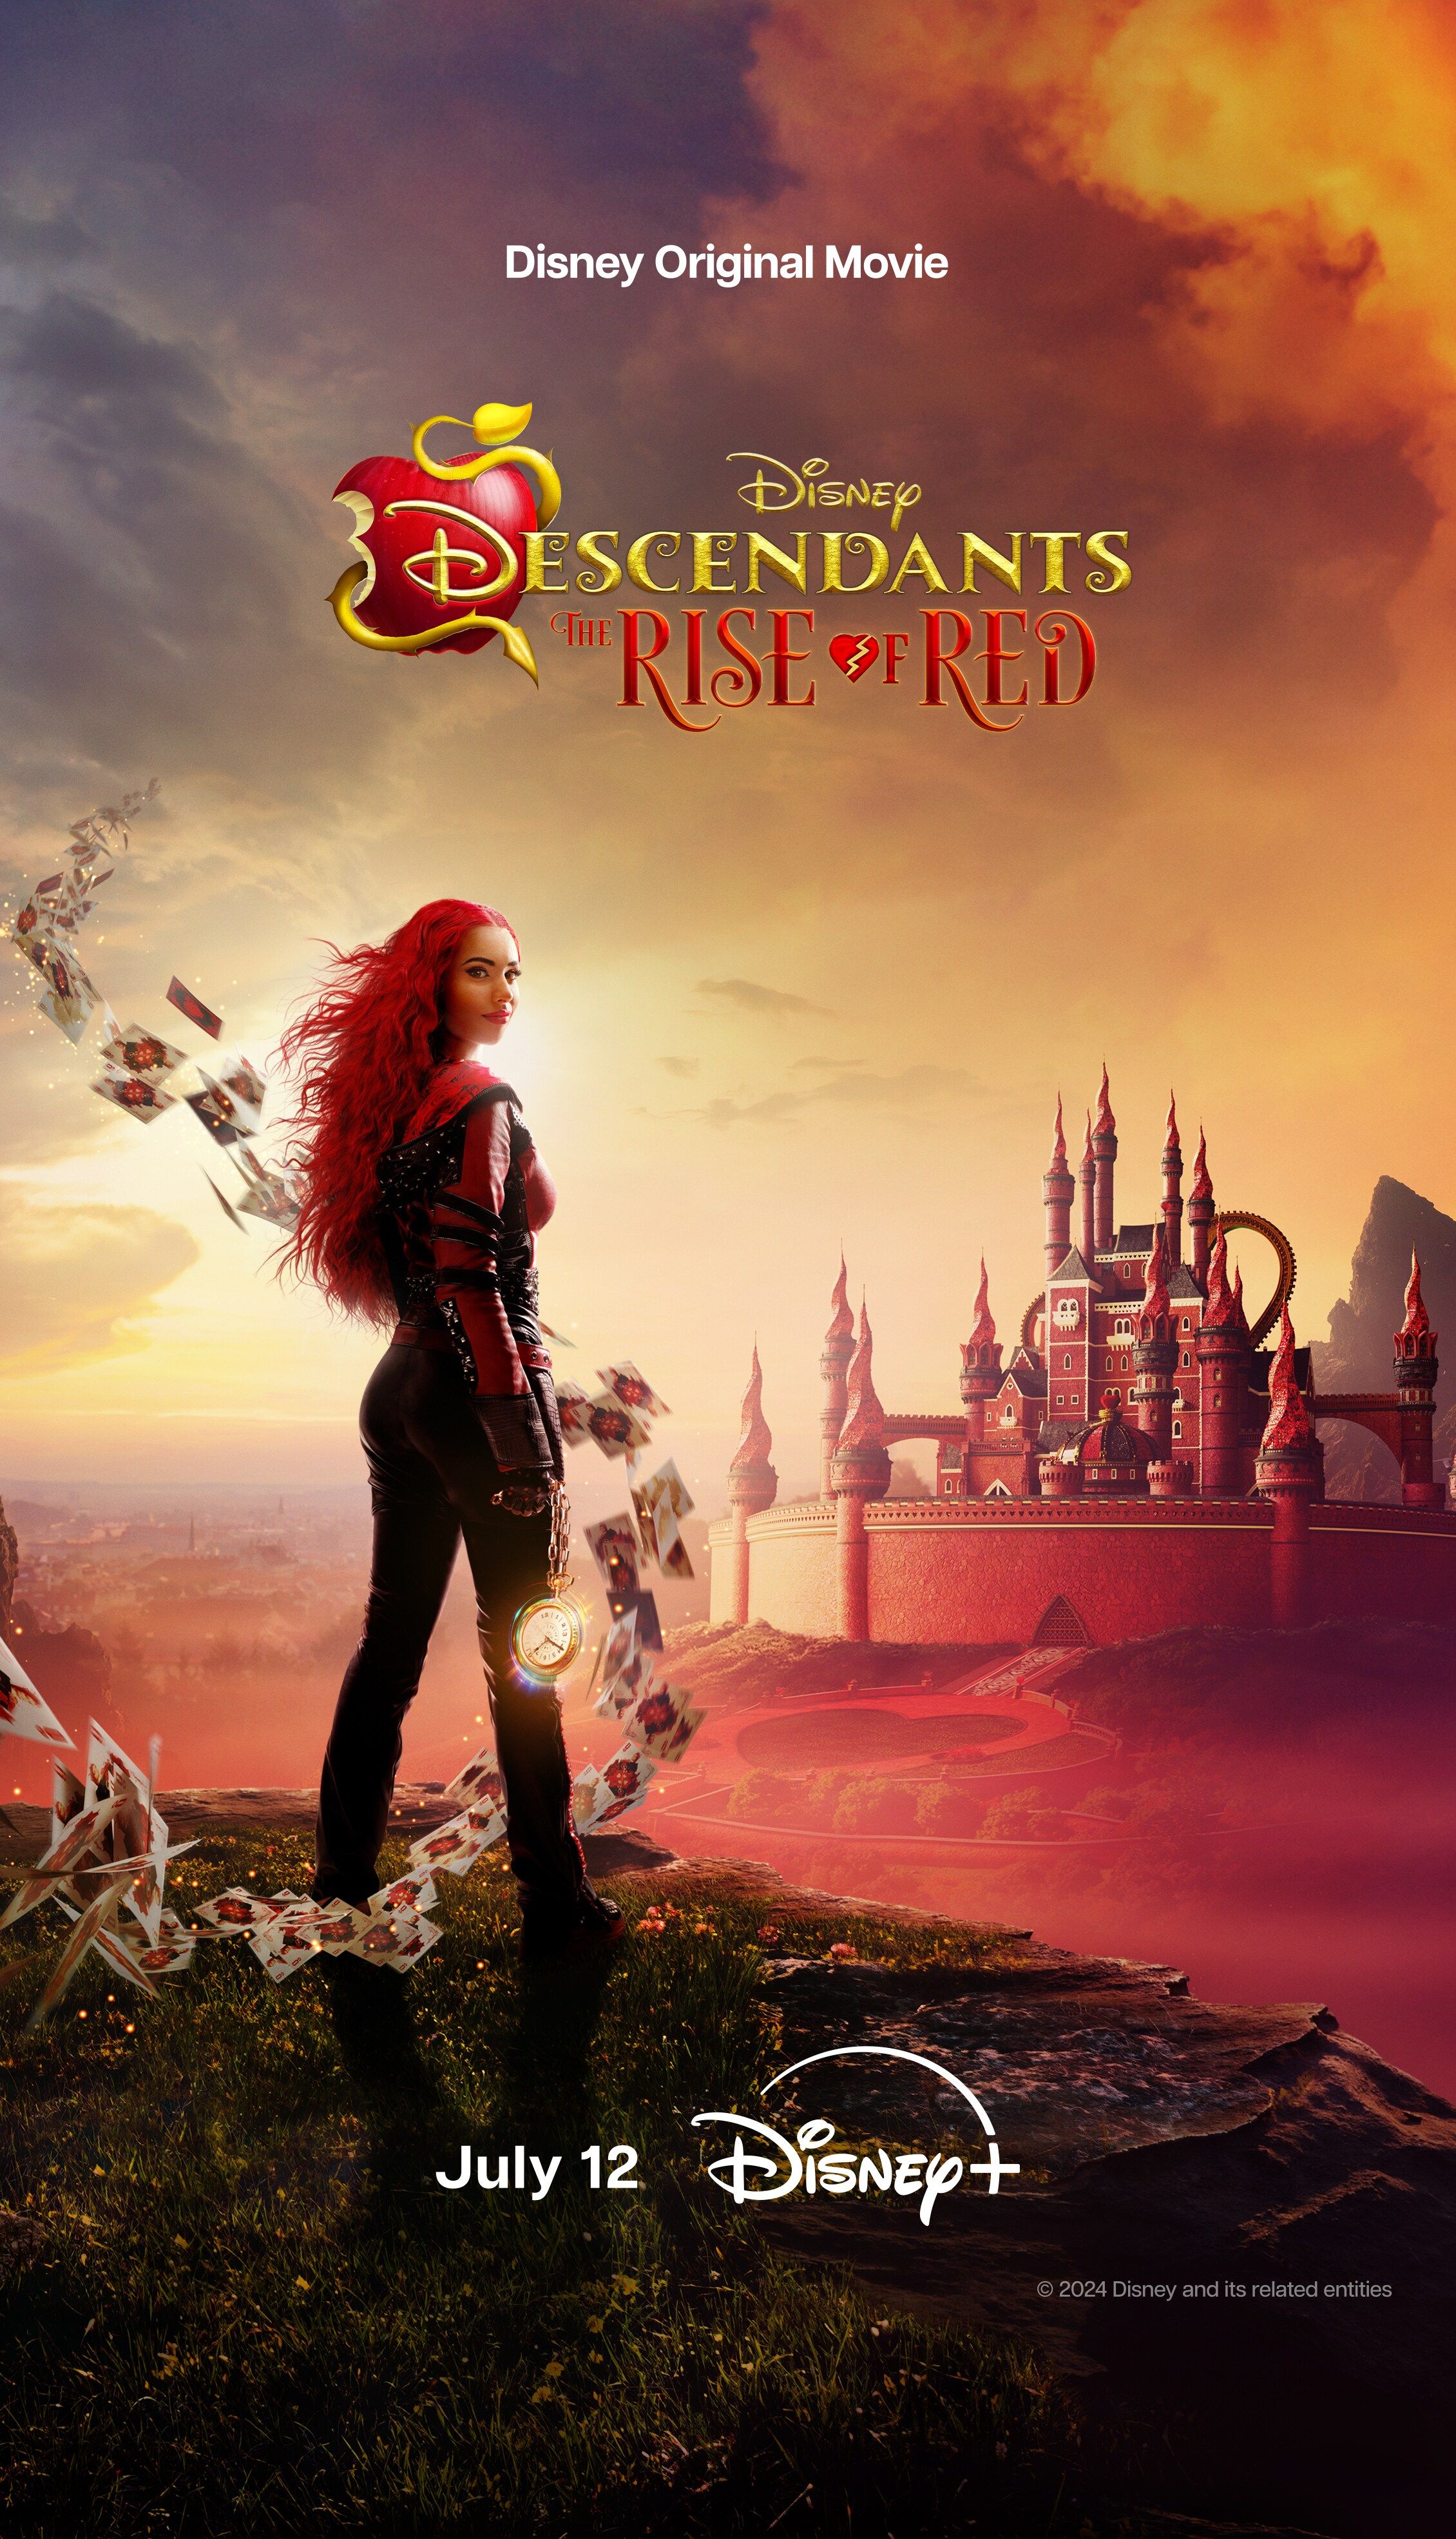 Descendants The Rise of Red Disney Plus Poster